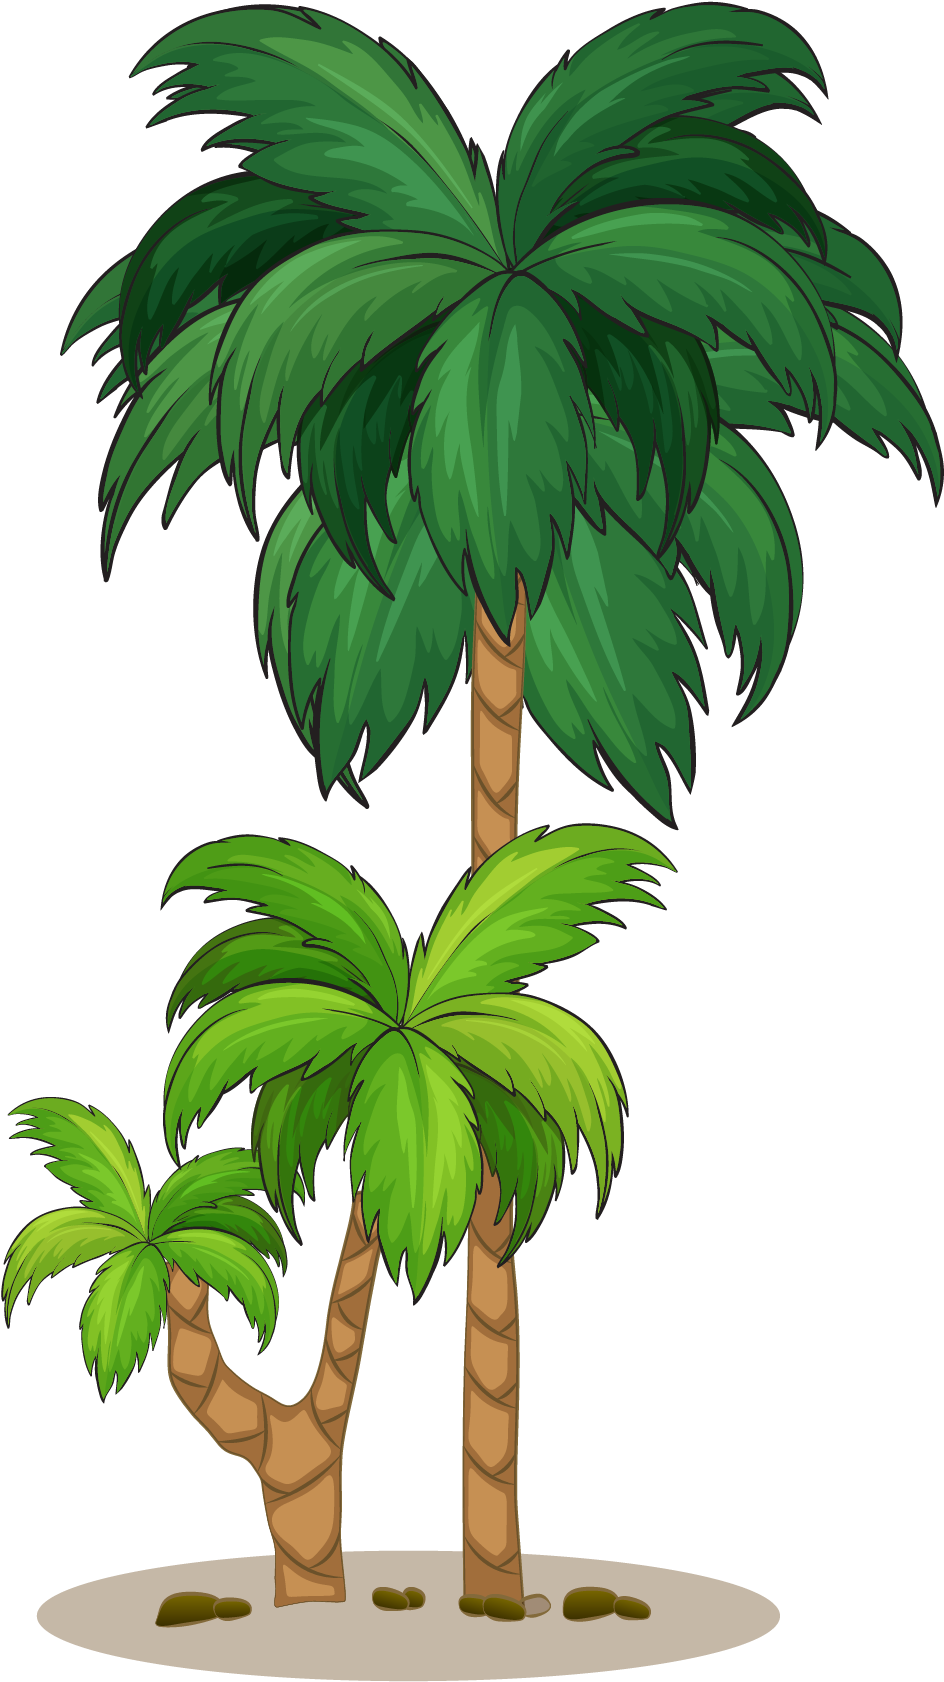 Coconut Arecaceae Tree Illustration - Coconut Arecaceae Tree Illustration (1213x1836)